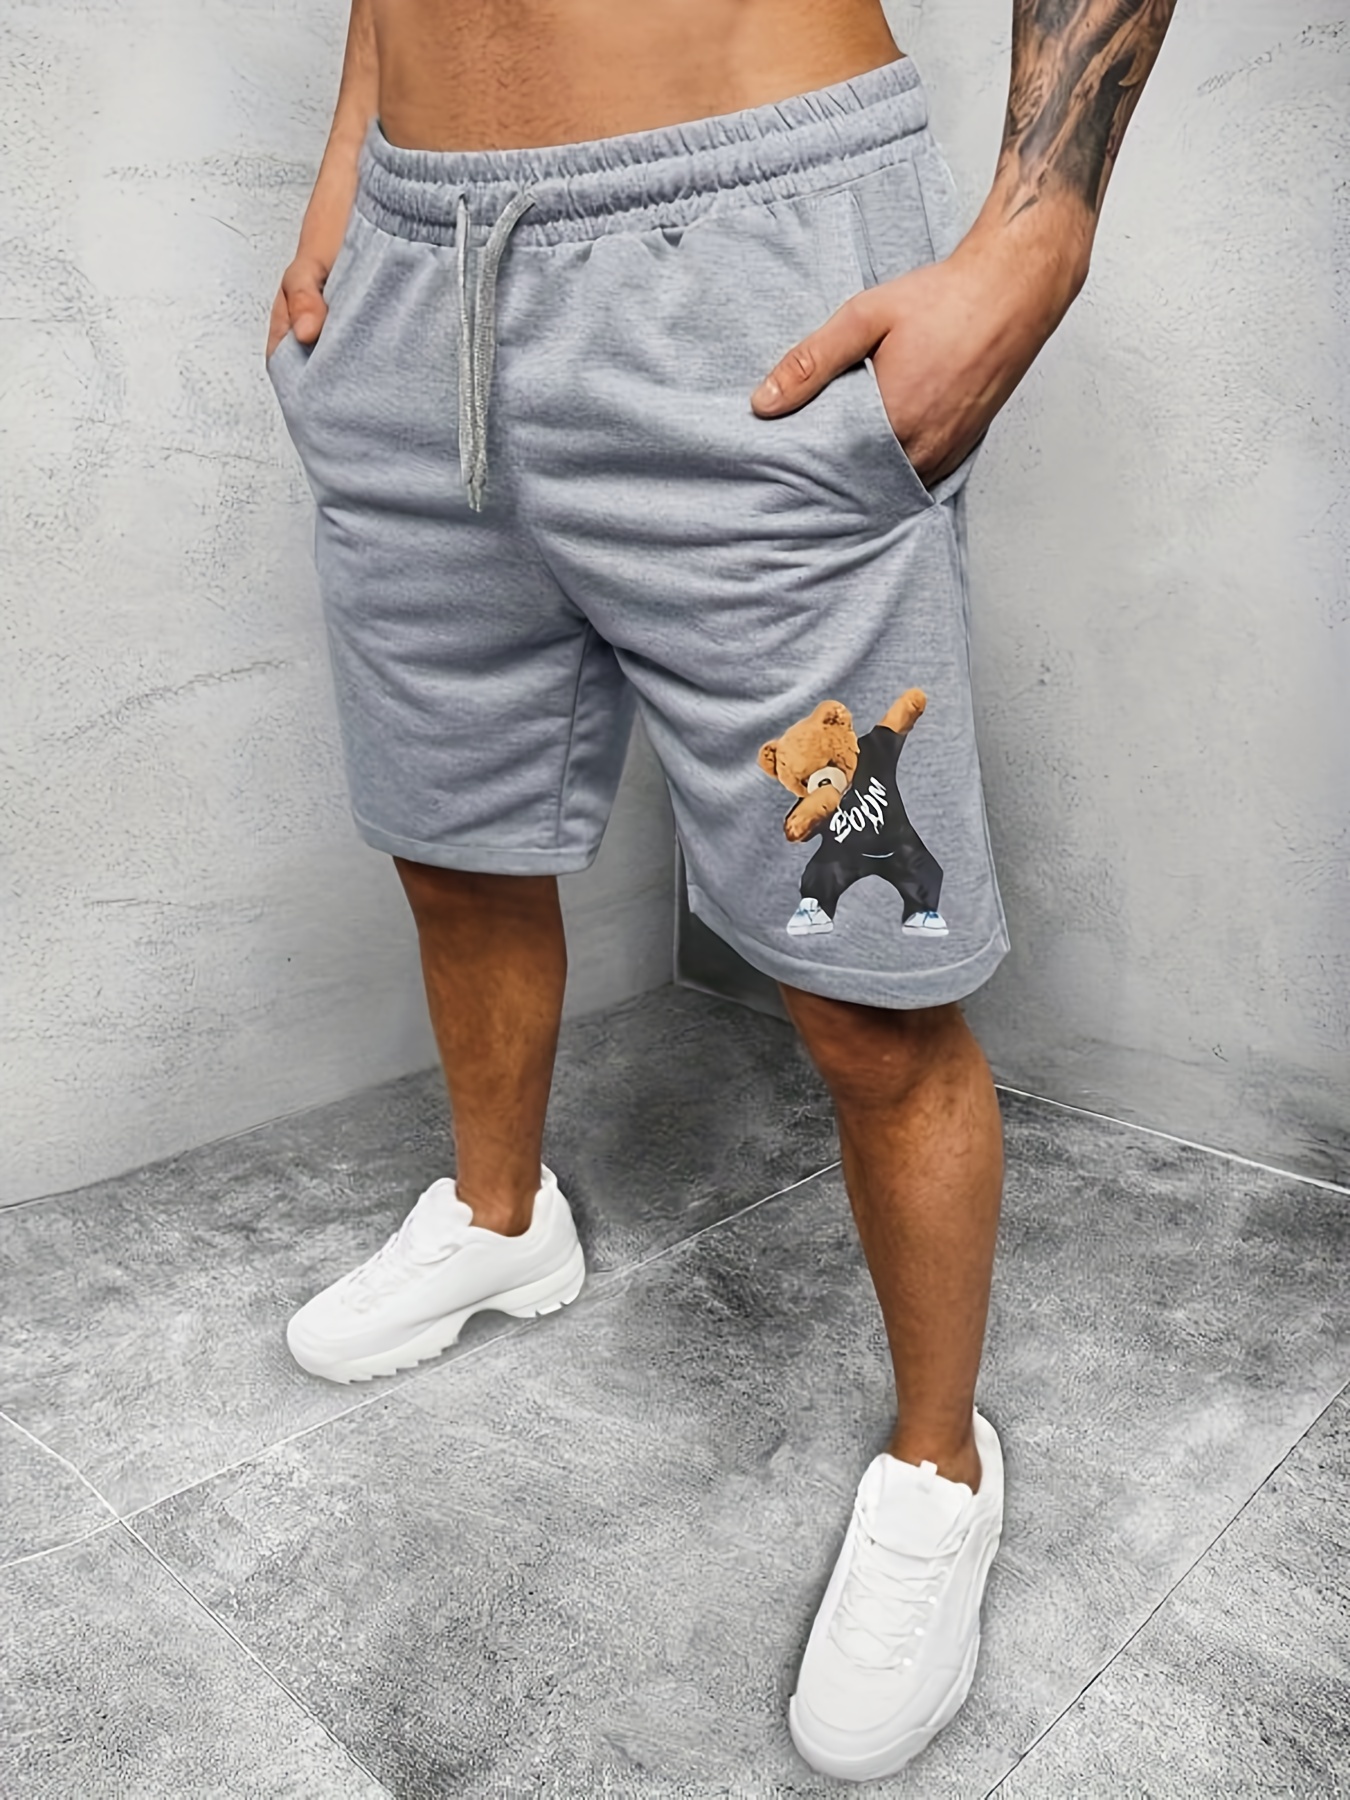 Hanes Men's Ultrasoft Modal Stretch Cozy Pajama Pants - Walmart.com